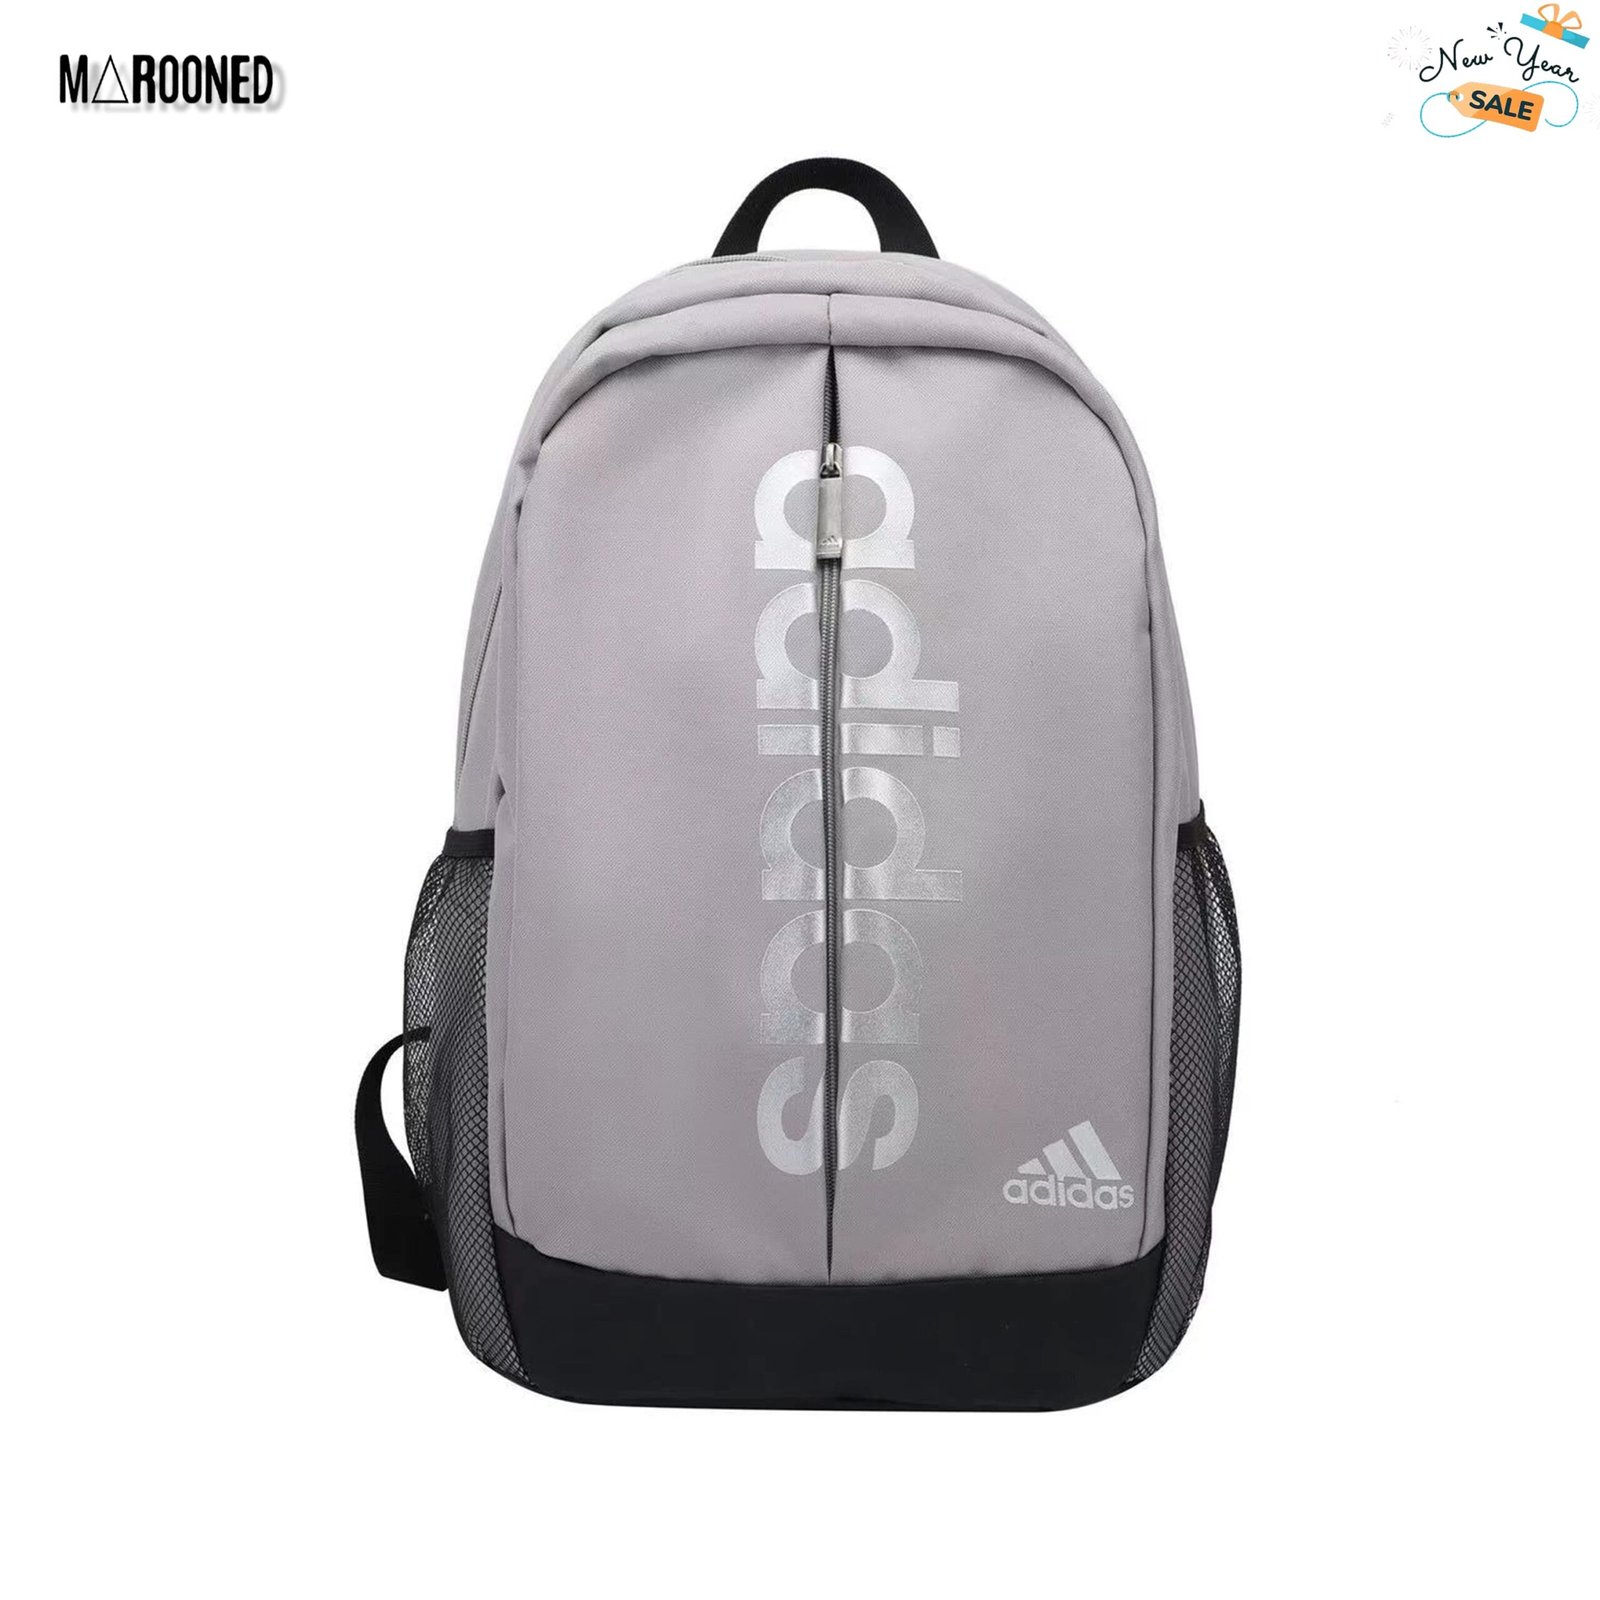 Adidas Bag Pack – Marooned